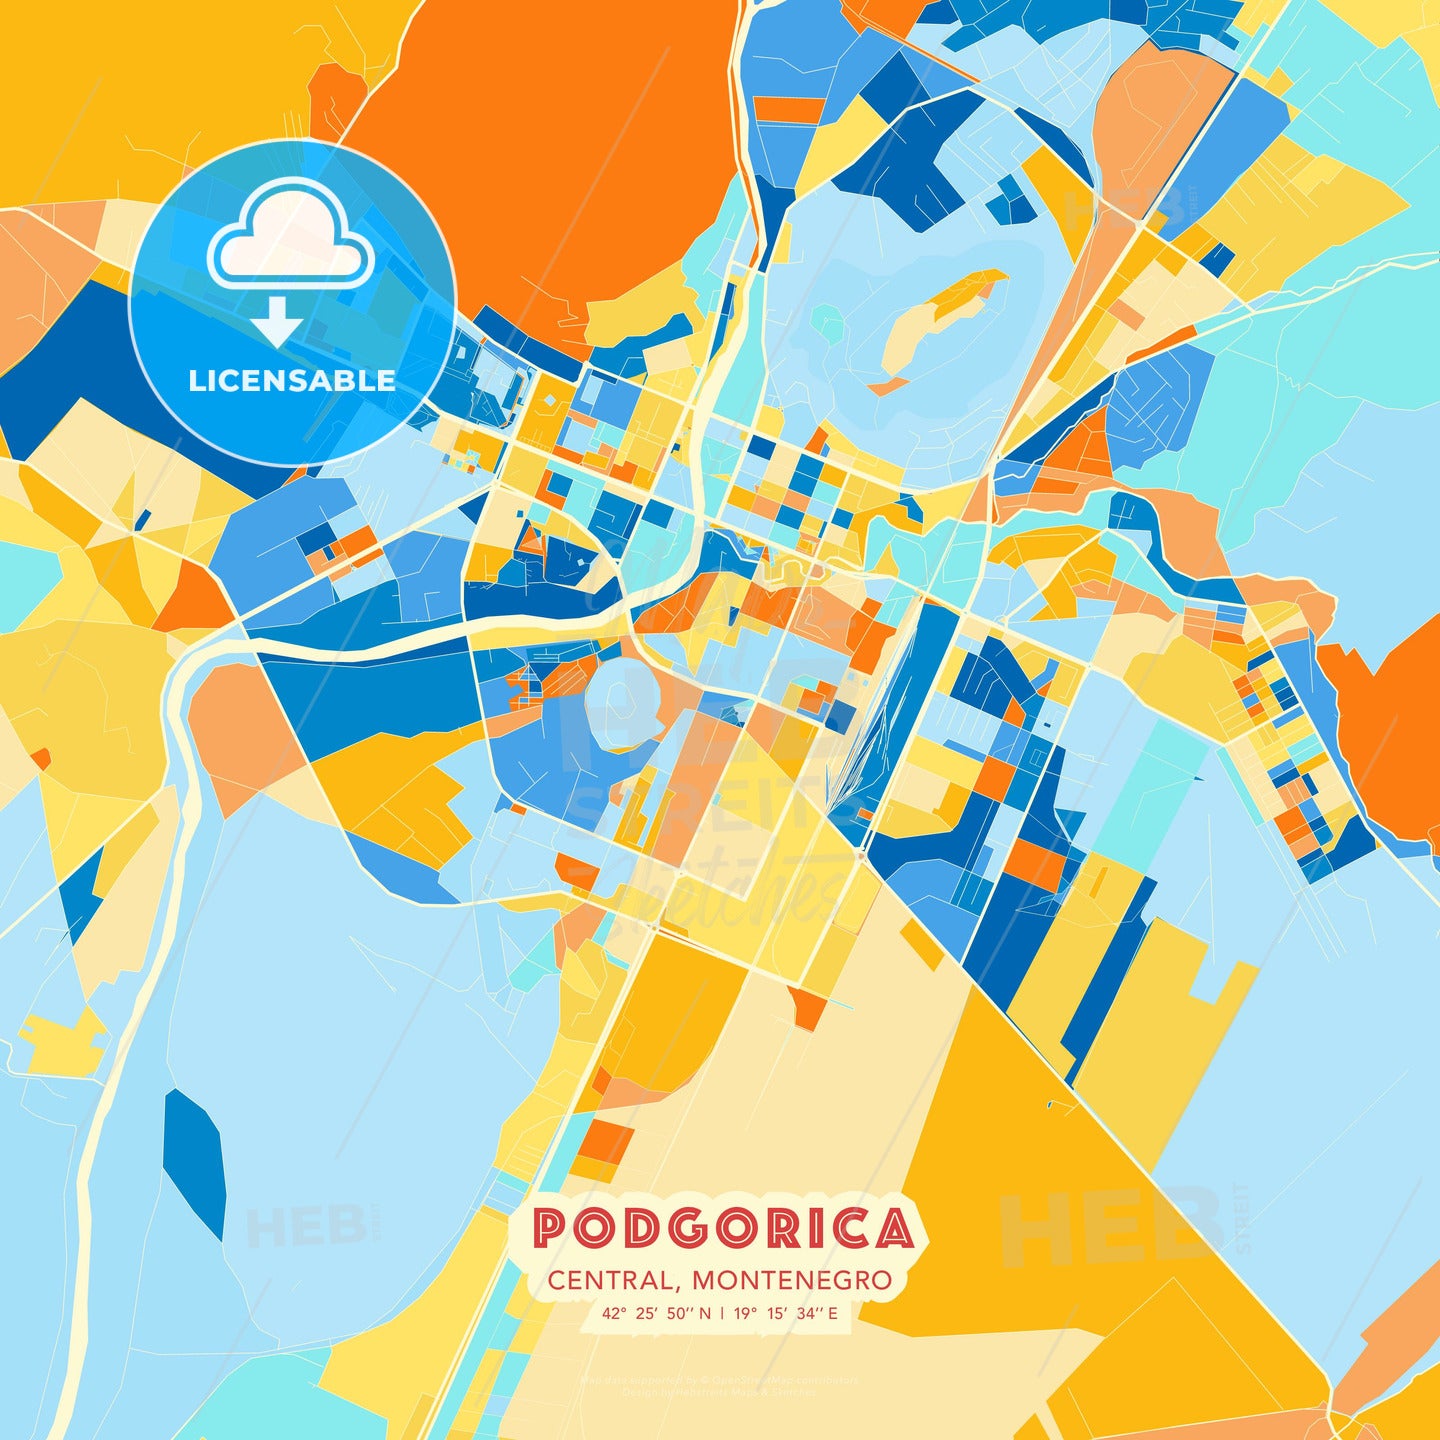 Podgorica, Central, Montenegro, map - HEBSTREITS Sketches